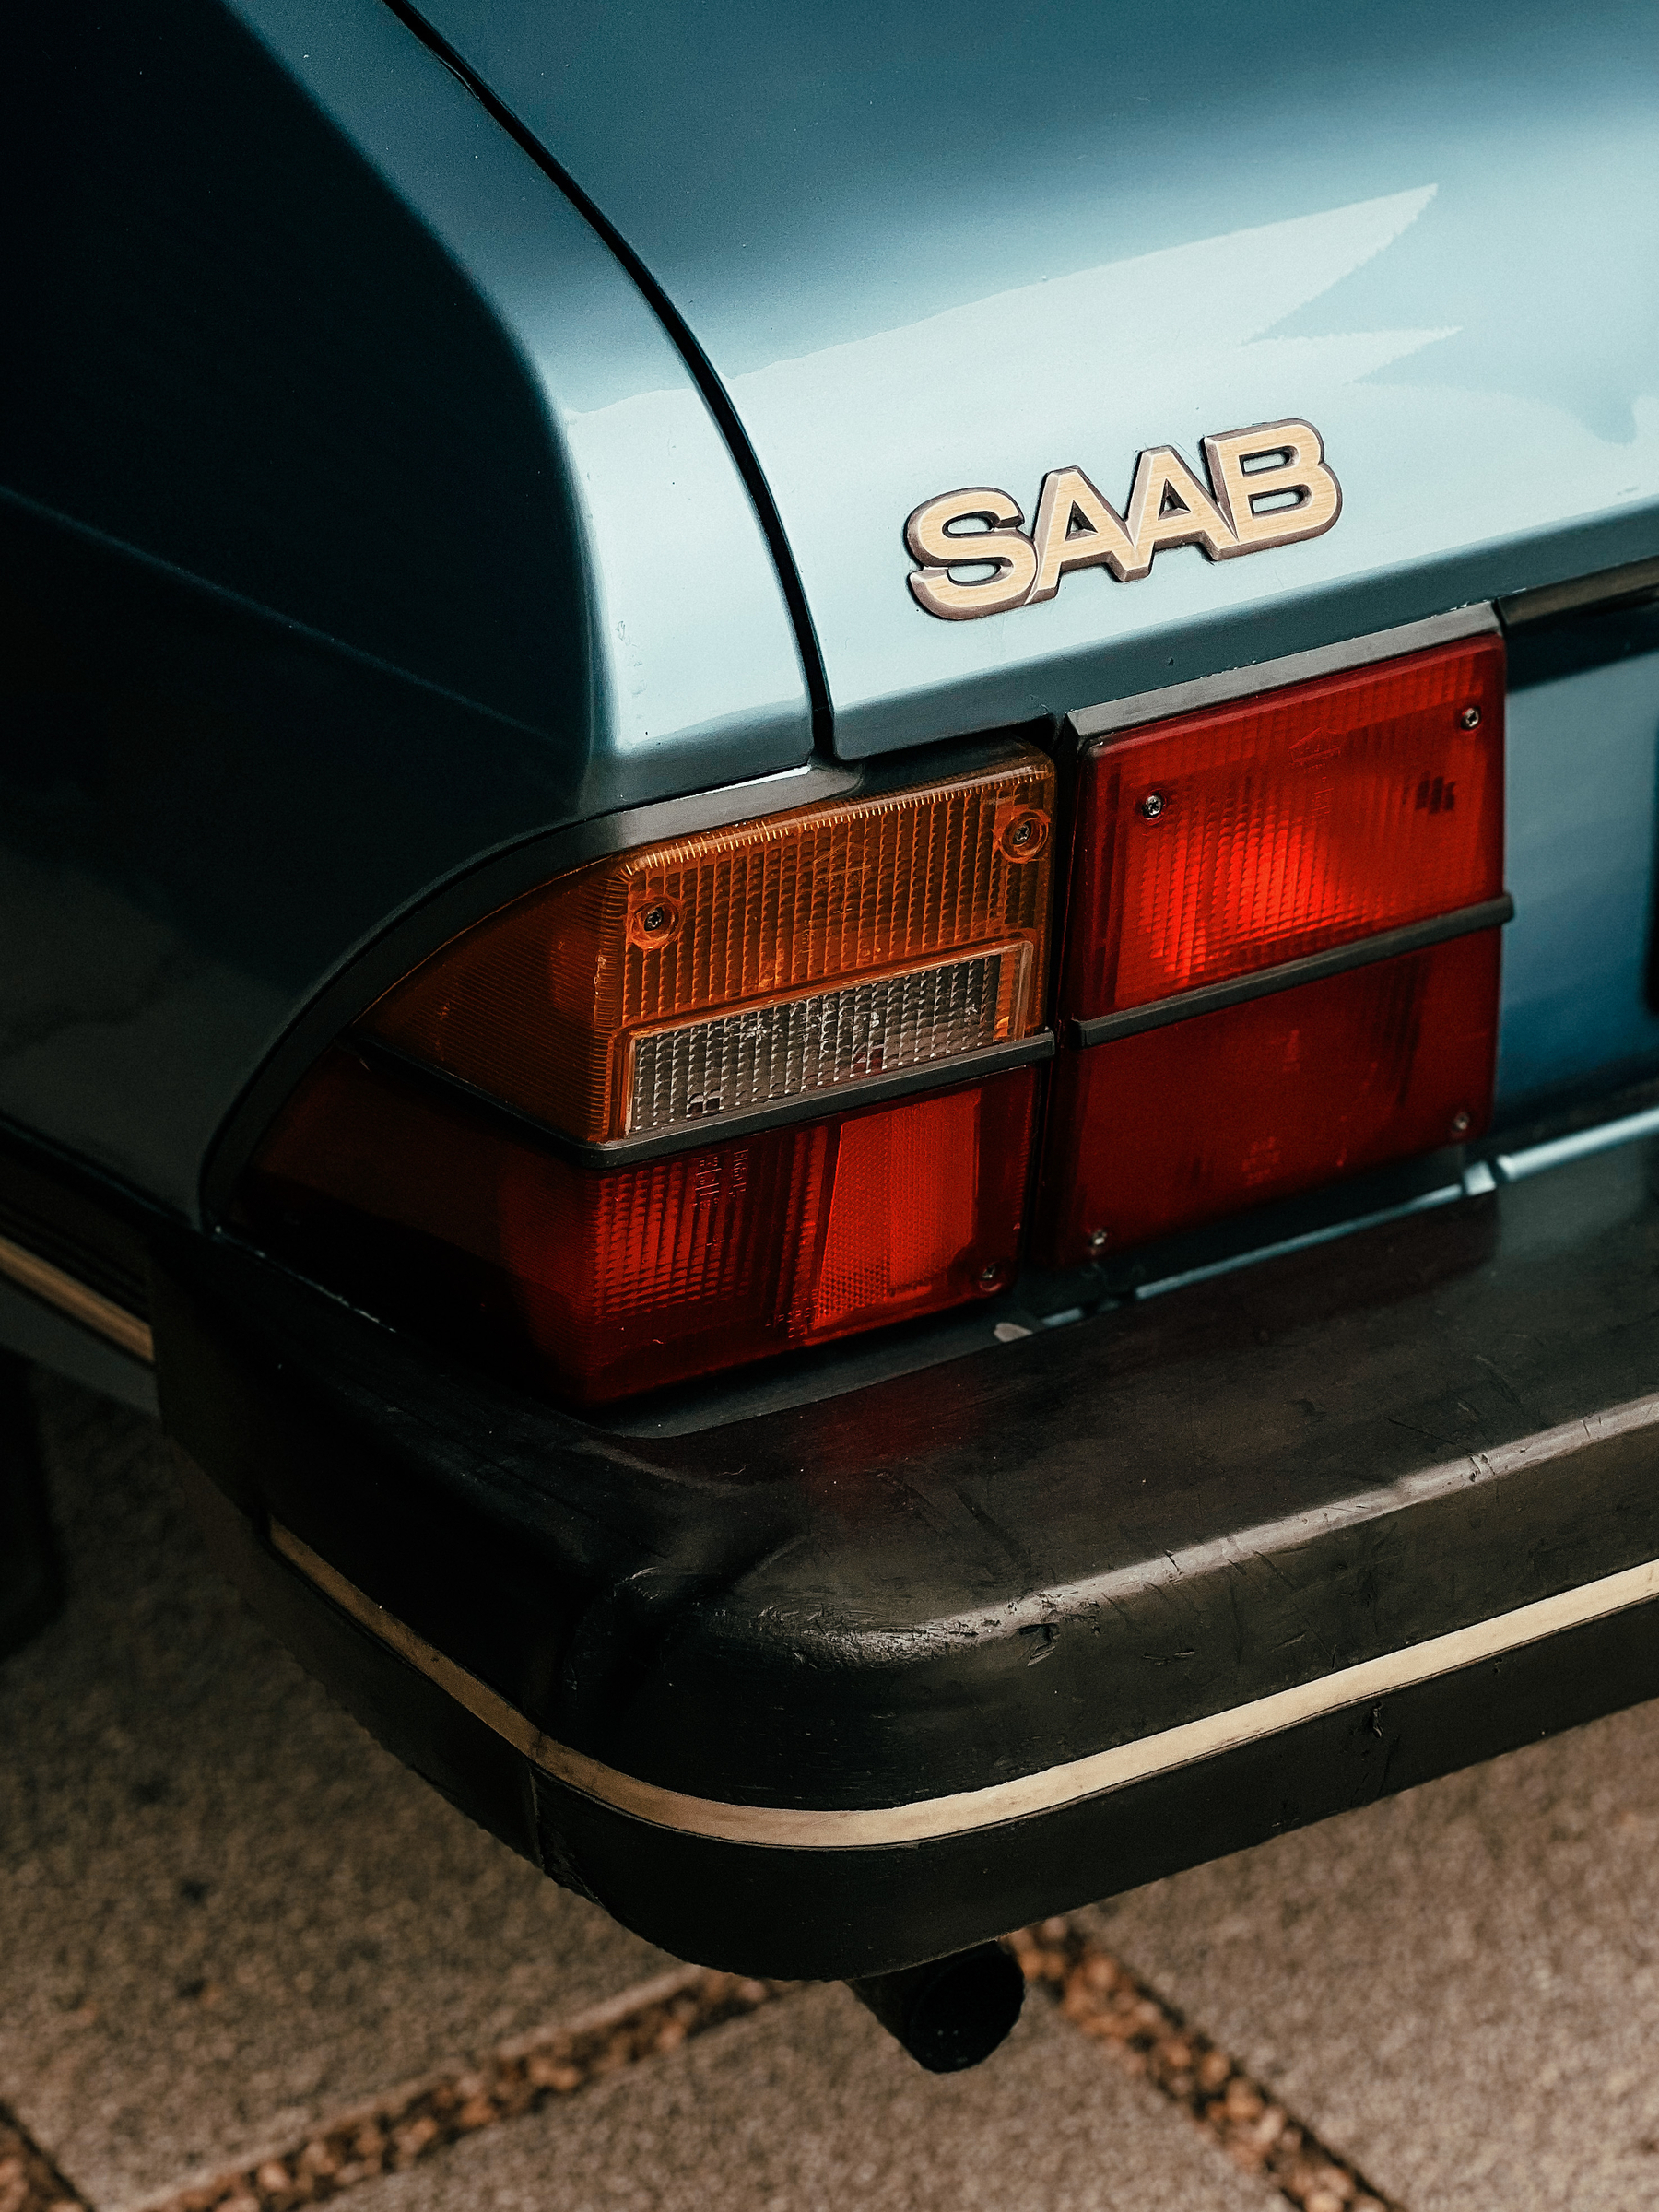 Detail of the back of a vintage SAAB car